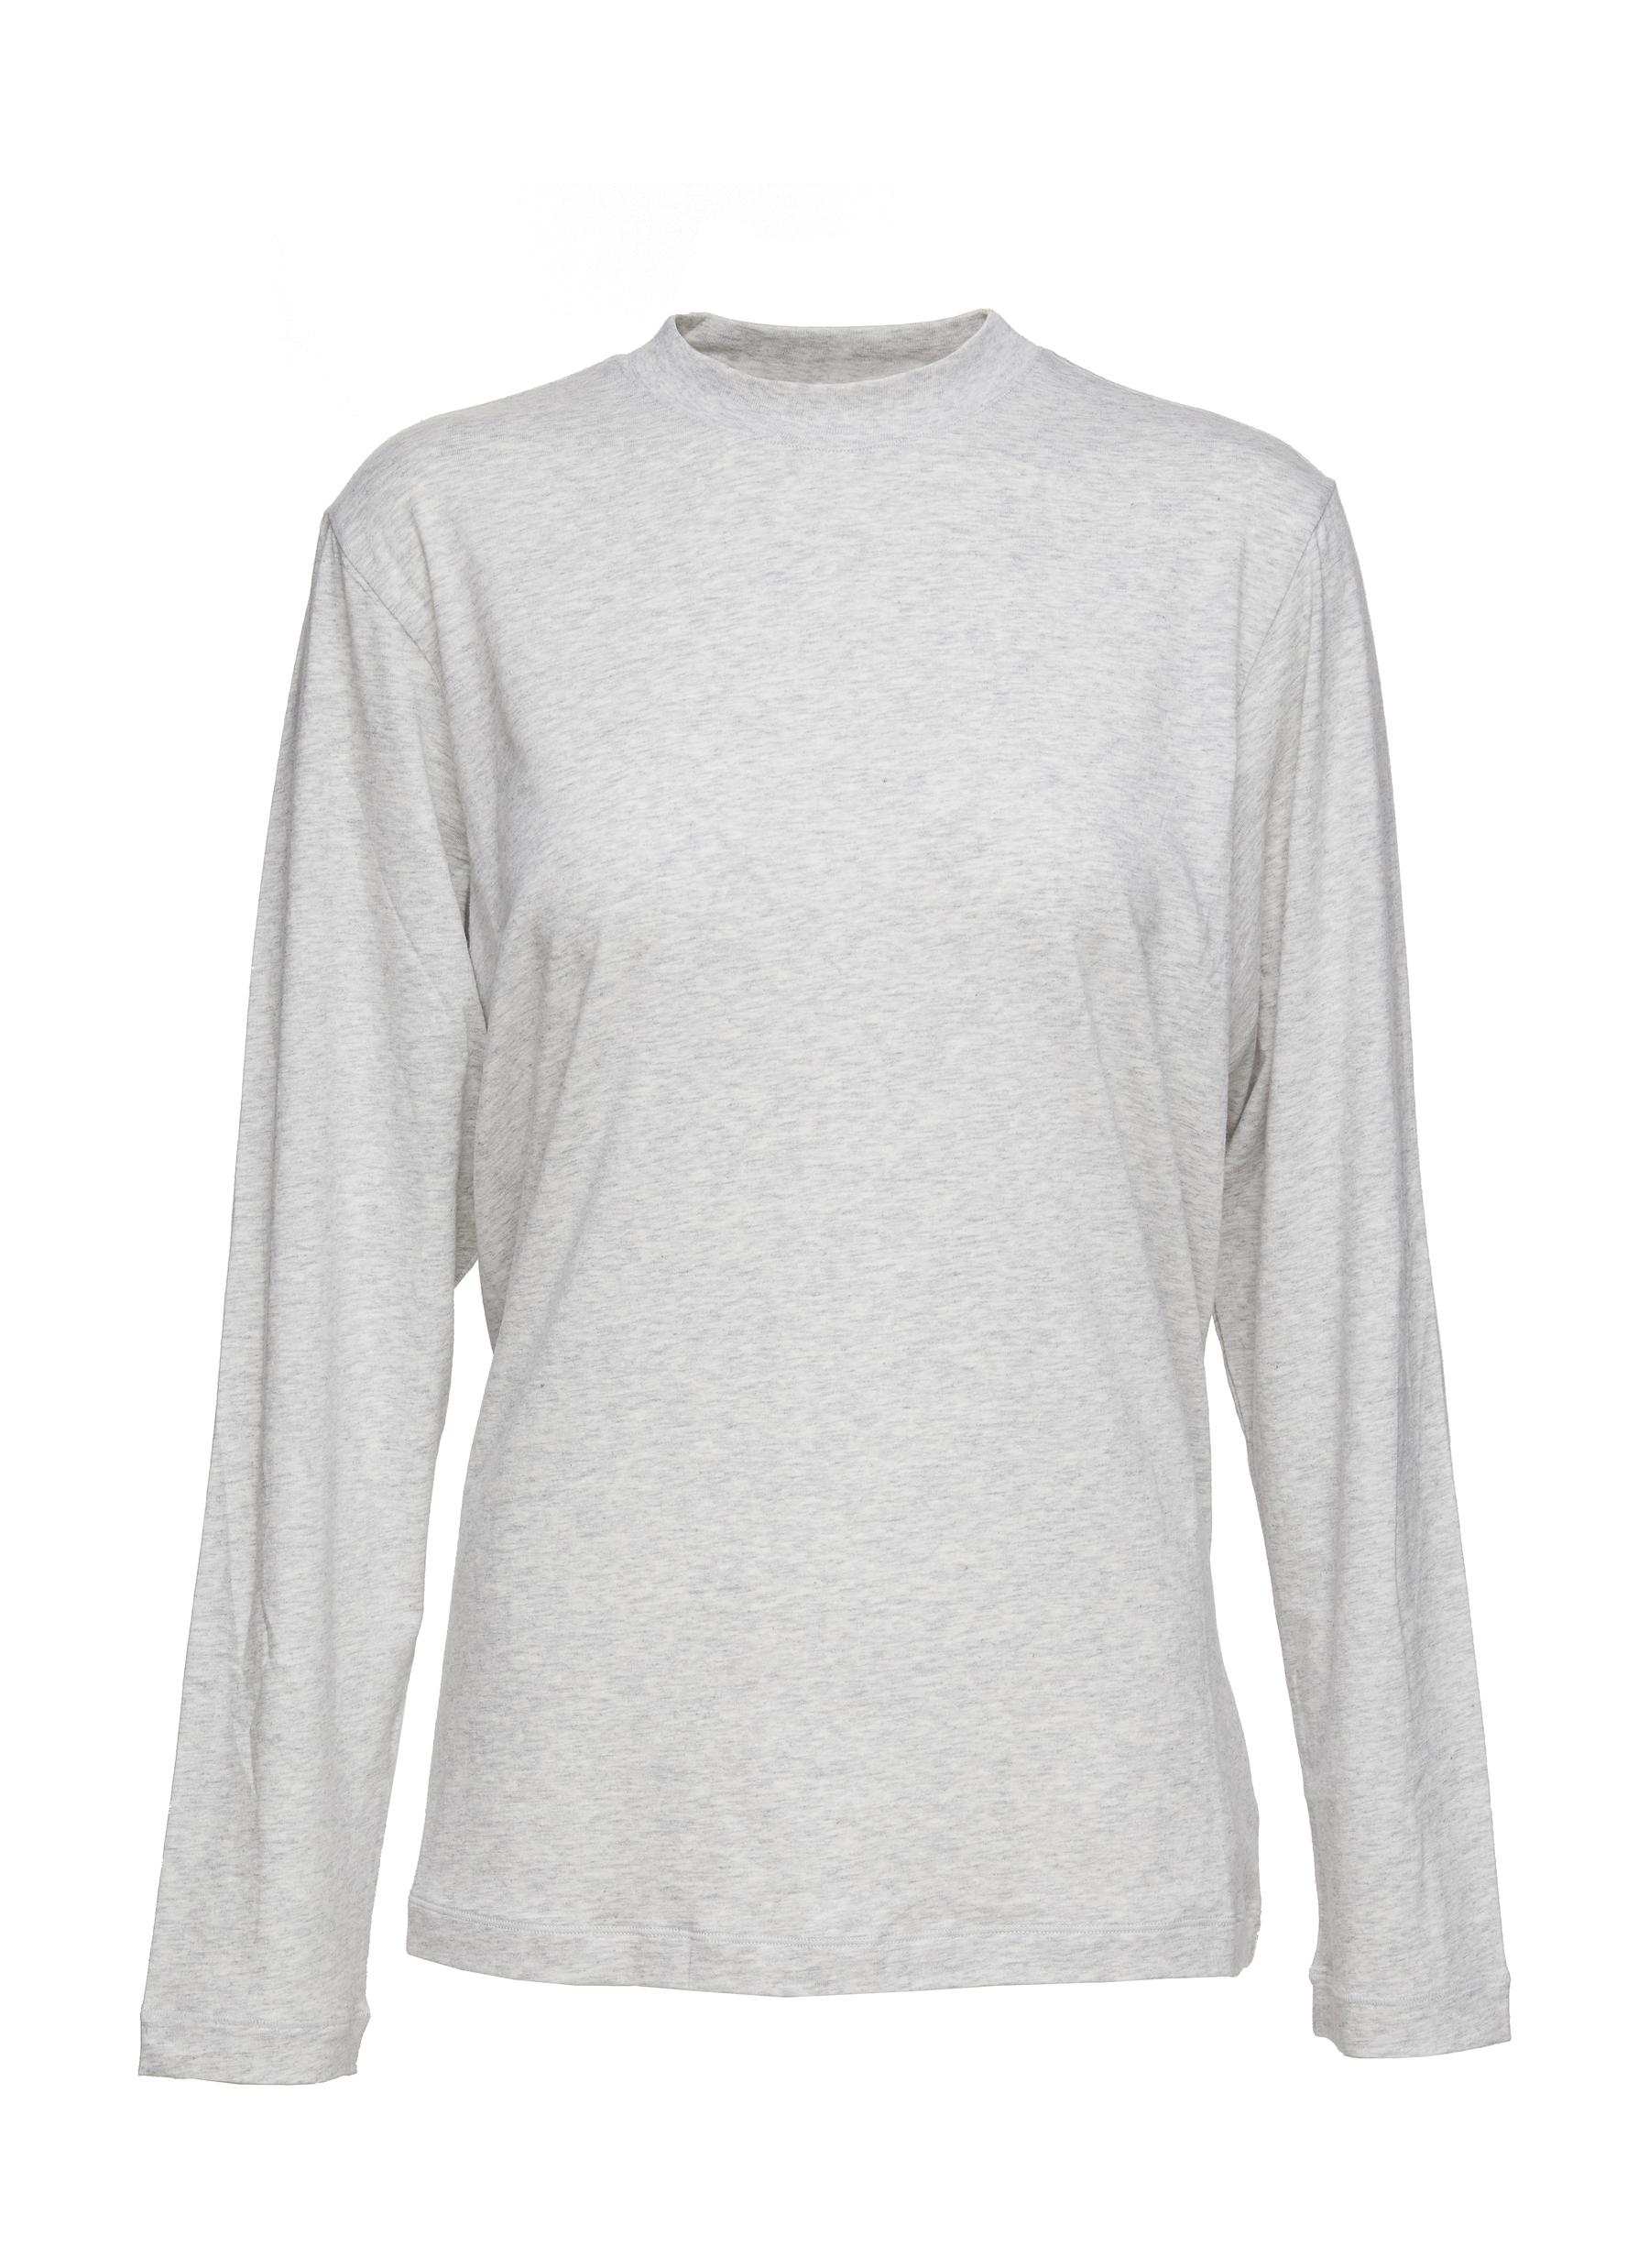 SKIMS Gray New Vintage Long Sleeve T-Shirt Size Large